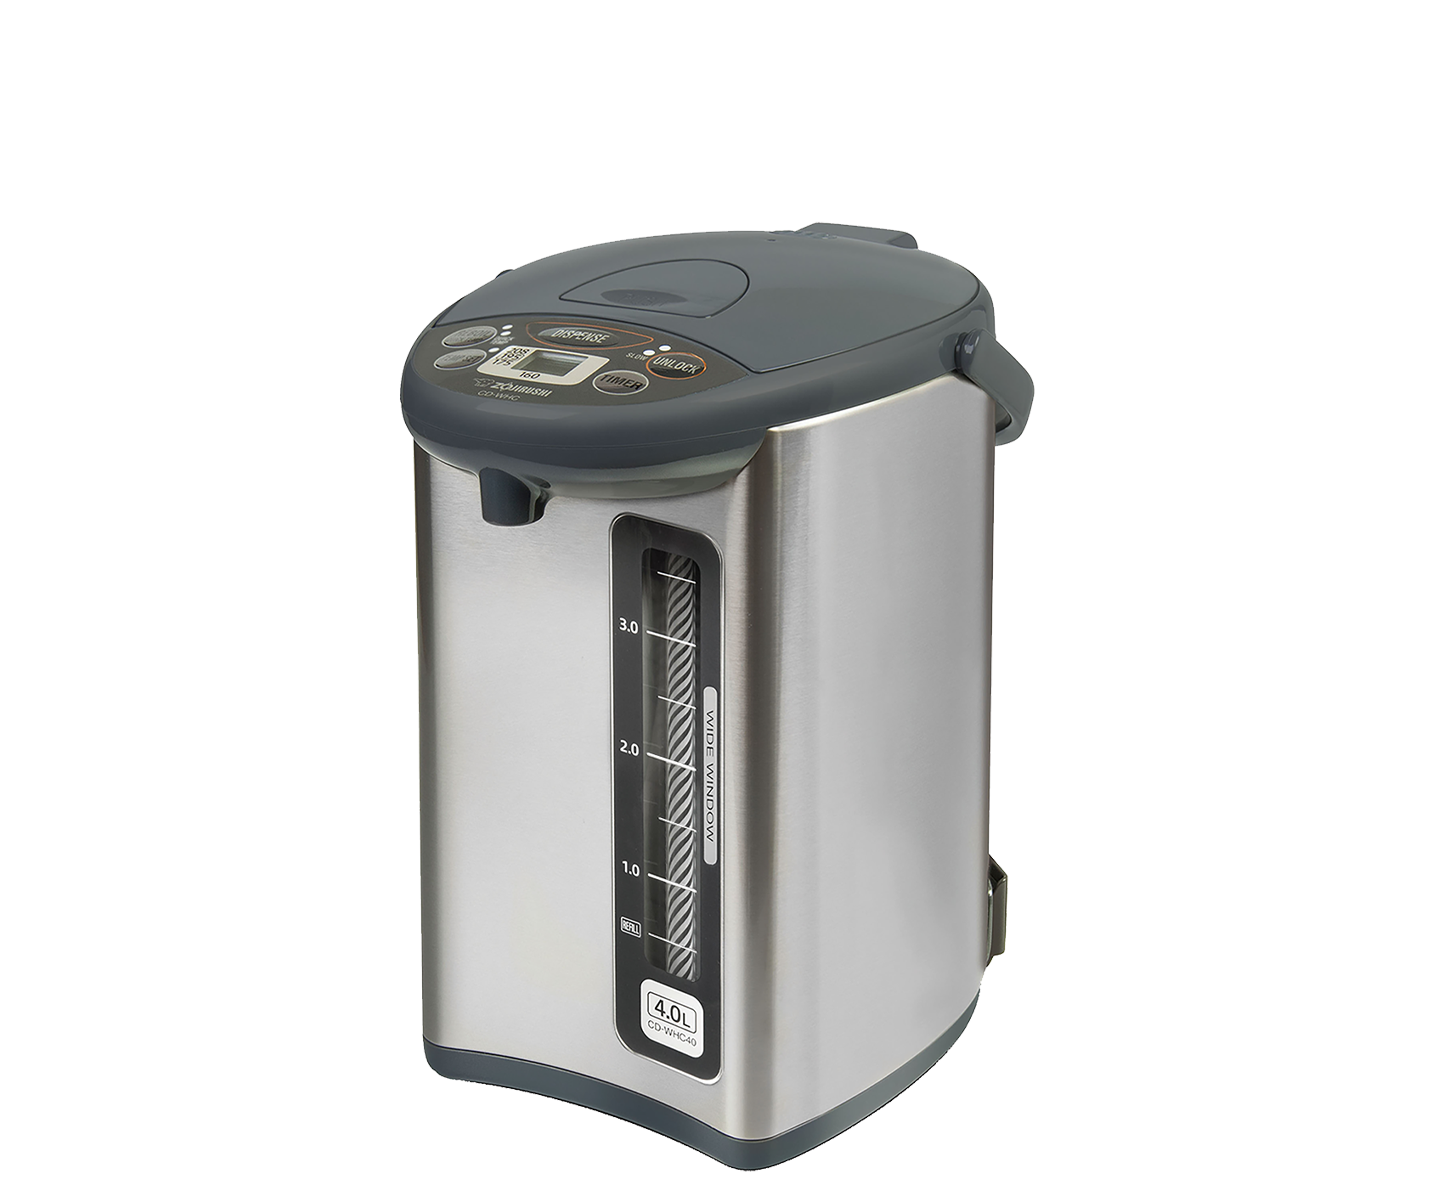 Micom Water Boiler & Warmer CD-WHC40